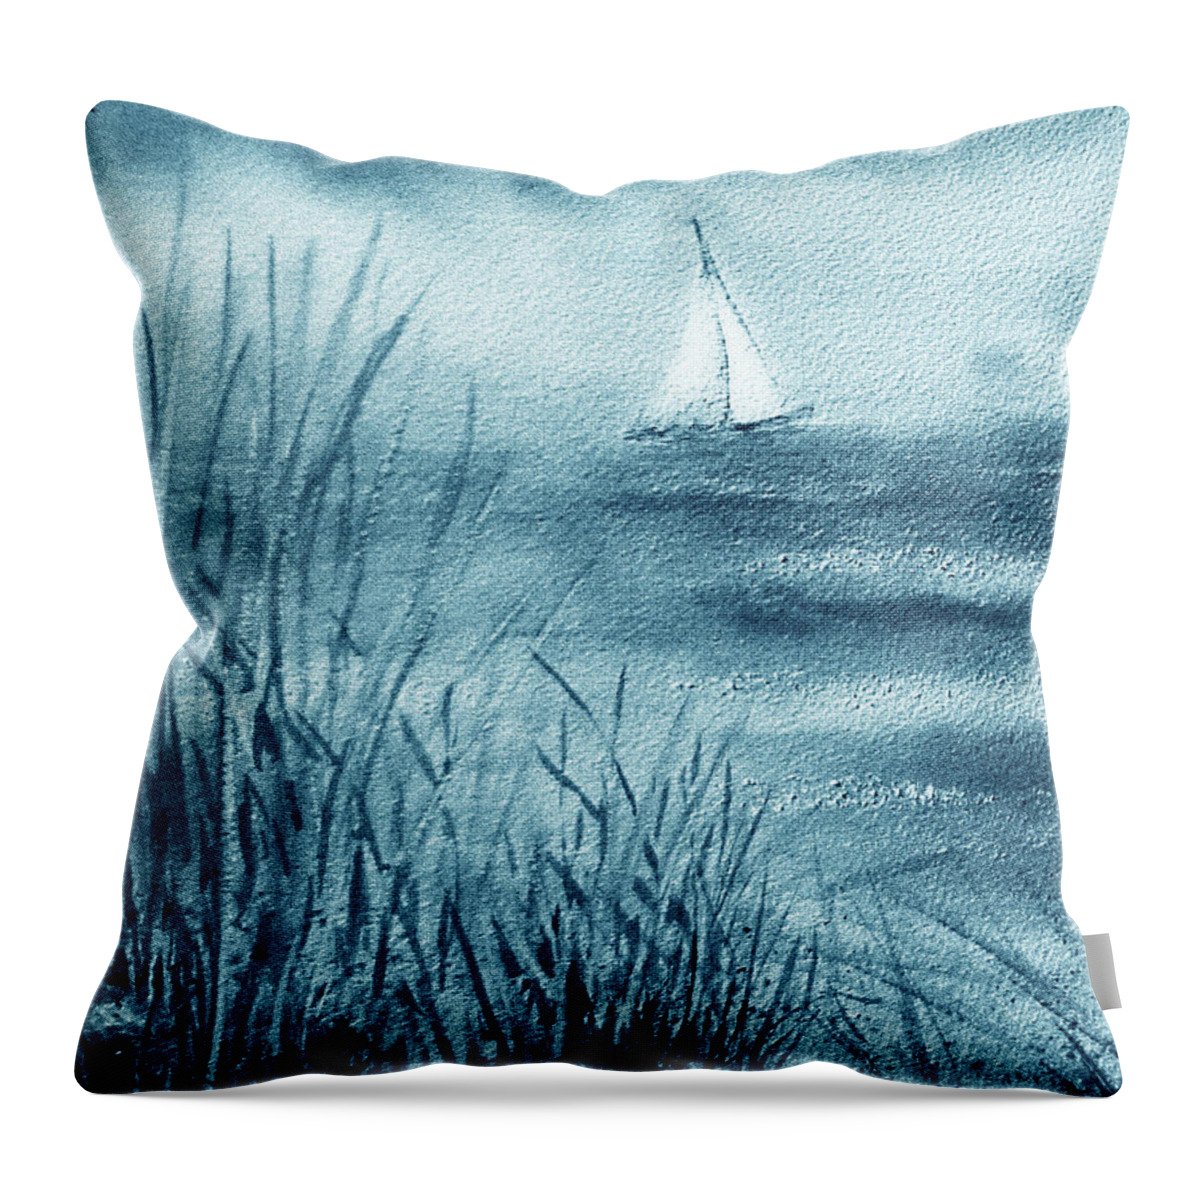 Indigo Throw Pillow featuring the painting Sailing To Peaceful Harbor Beach House Blue Decor by Irina Sztukowski